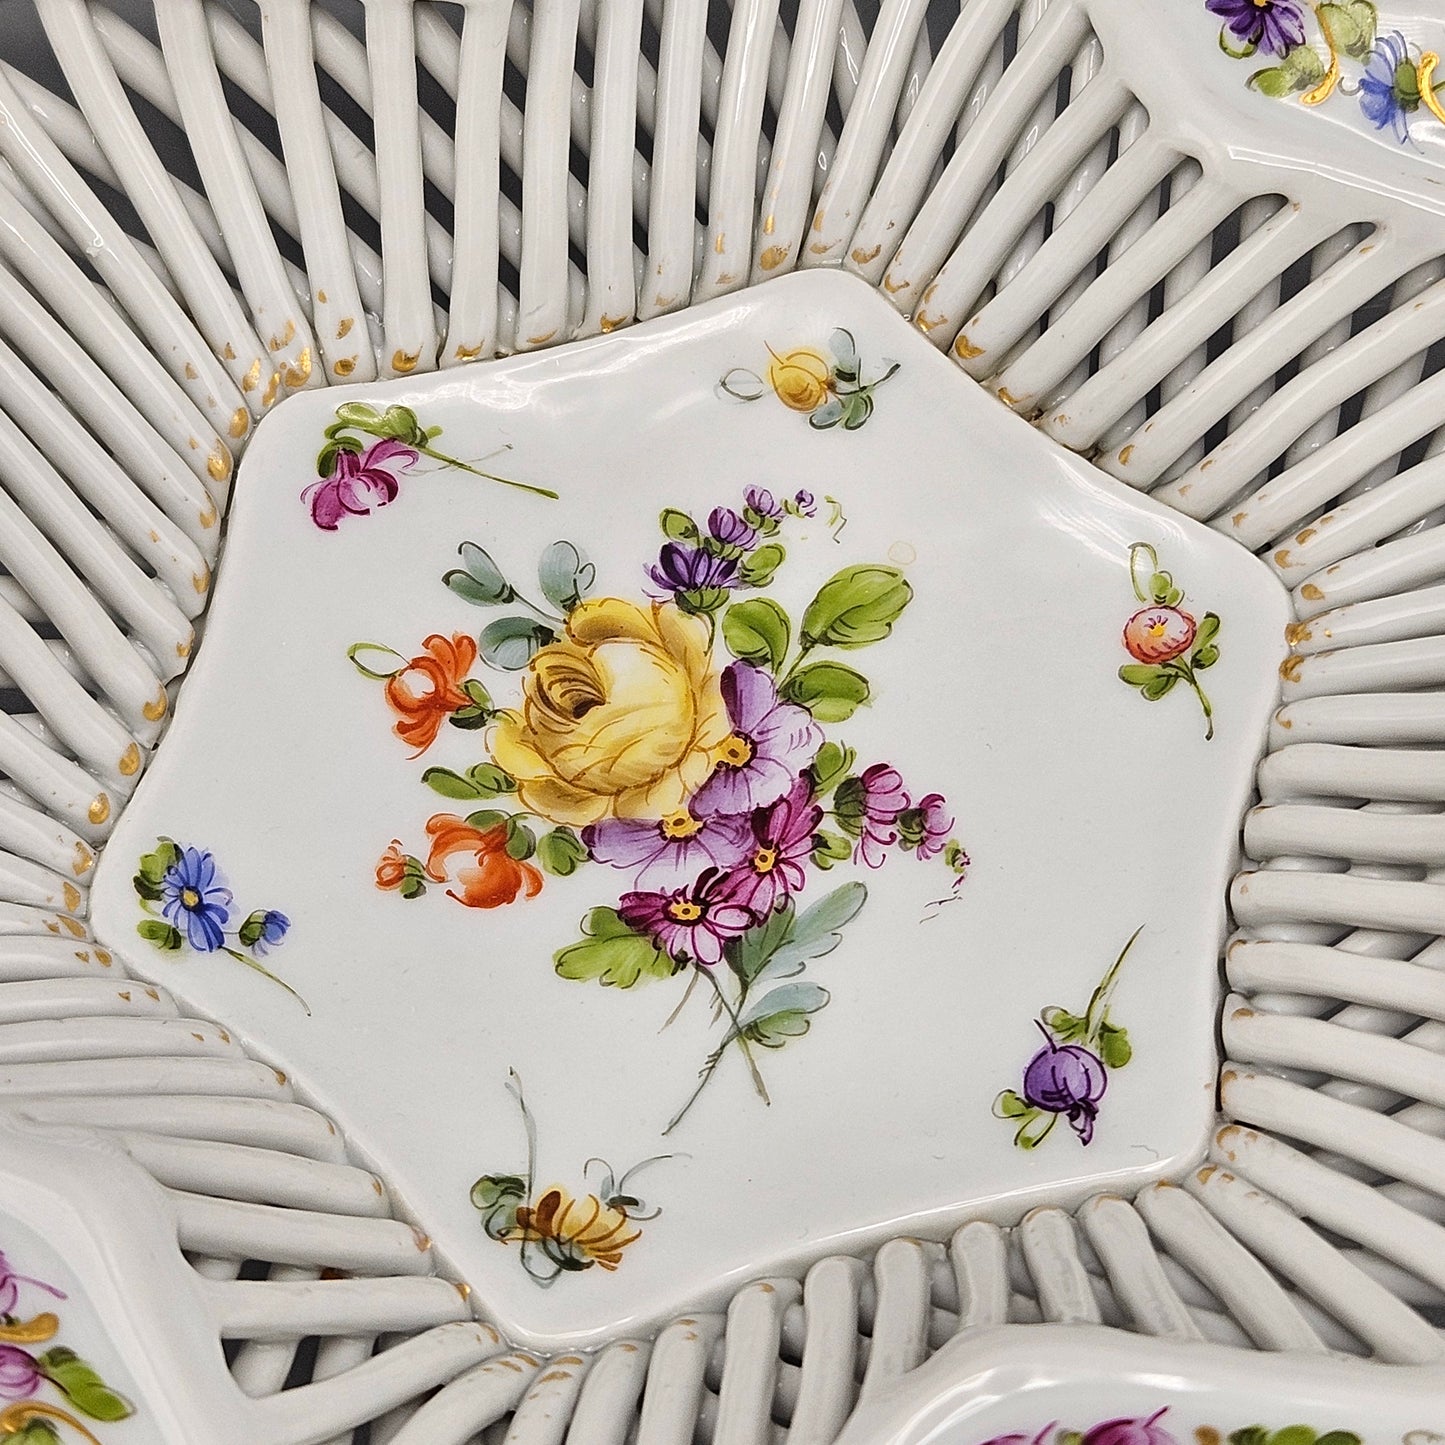 Vintage C.G. Schierholz & Sohn Germany Hand Painted Weaved Porcelain Star Shaped Basket